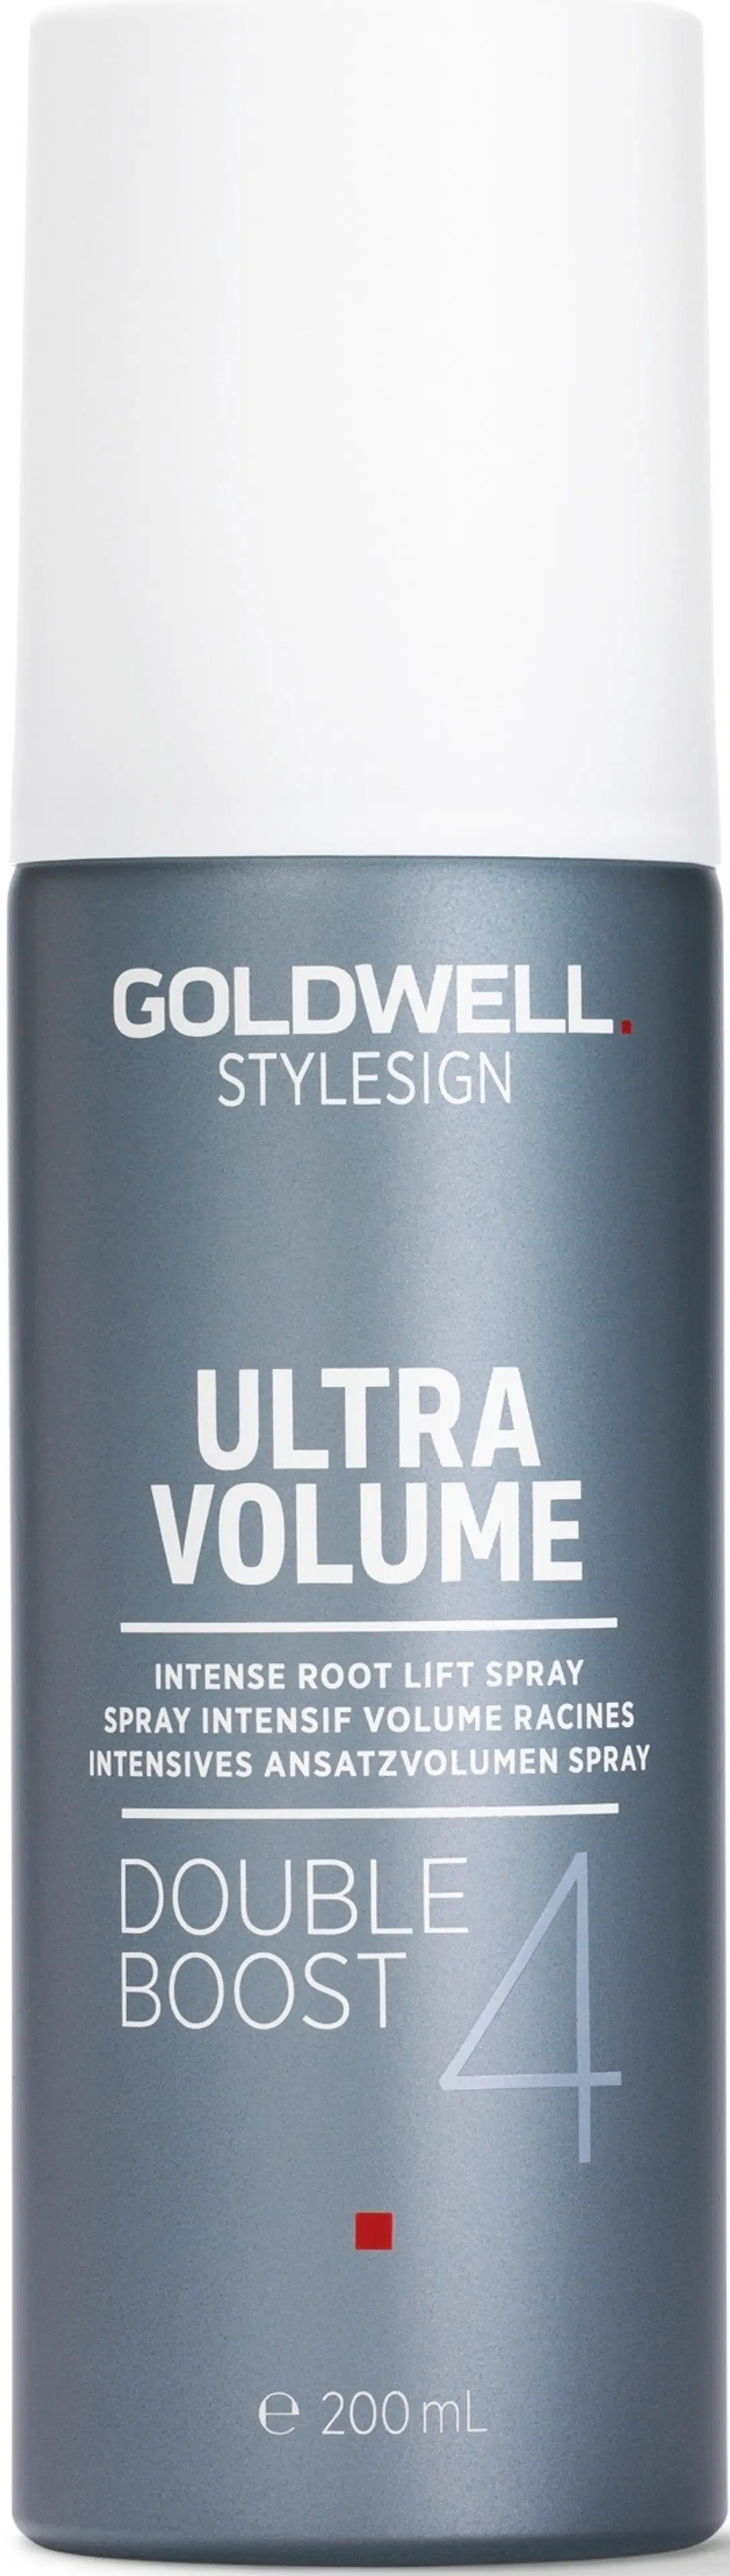 Goldwell StyleSign Ultra Volume Double Boost 4 Root lift spray tyvisuihke 200 ml